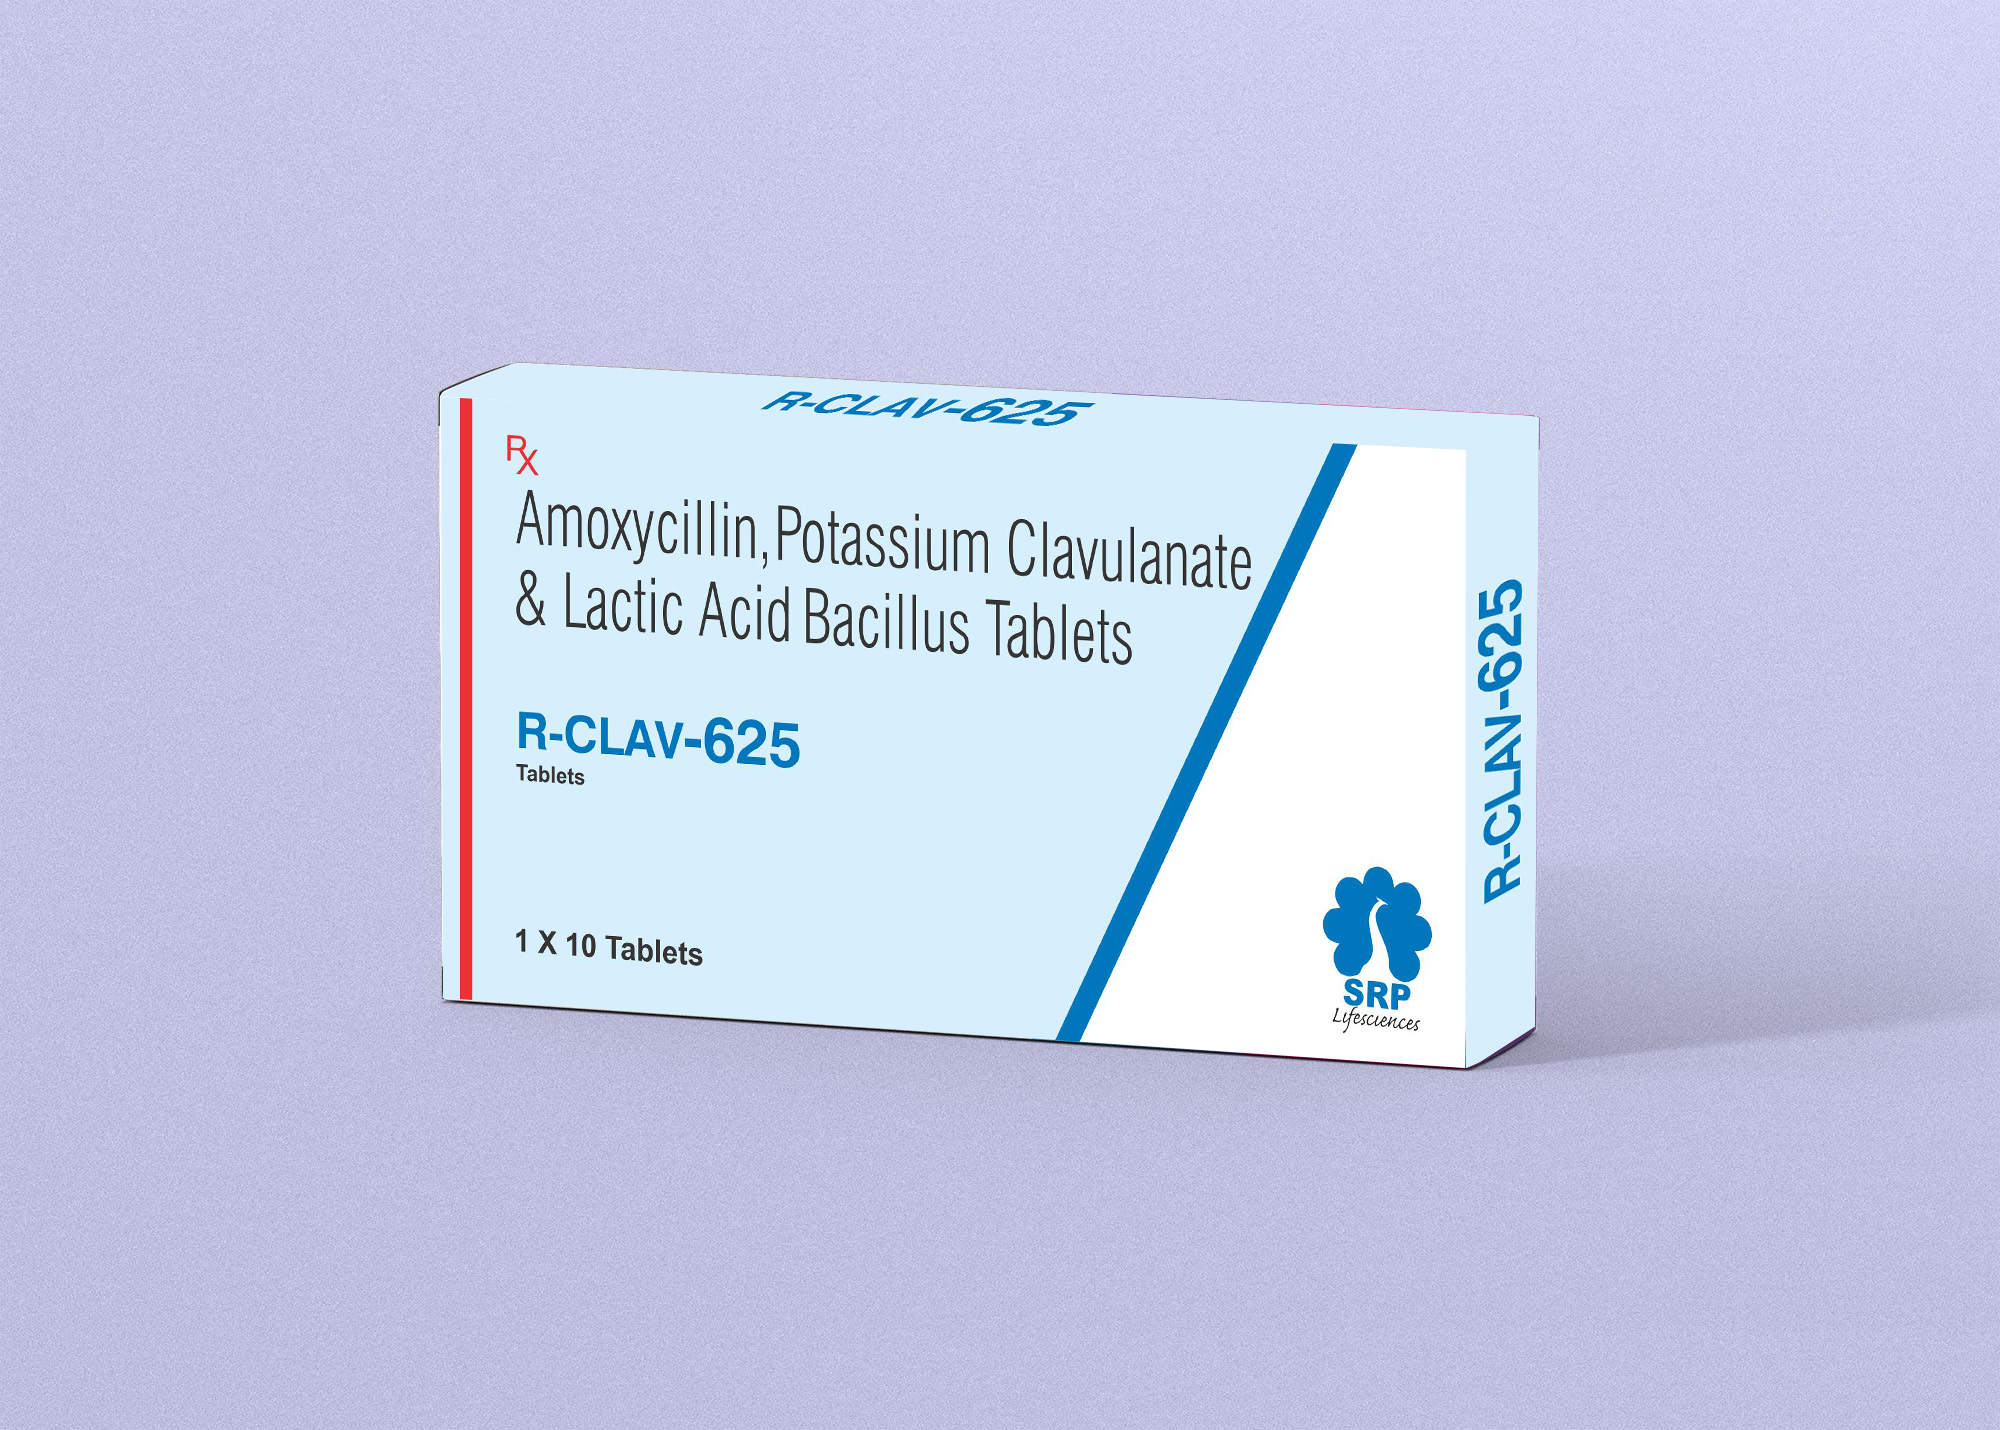 Product Name: R CLAV 625, Compositions of Amoxicillin, Potassium Clavulanate & Lactic Acid Bacillus Tablets are Amoxicillin, Potassium Clavulanate & Lactic Acid Bacillus Tablets - Cynak Healthcare